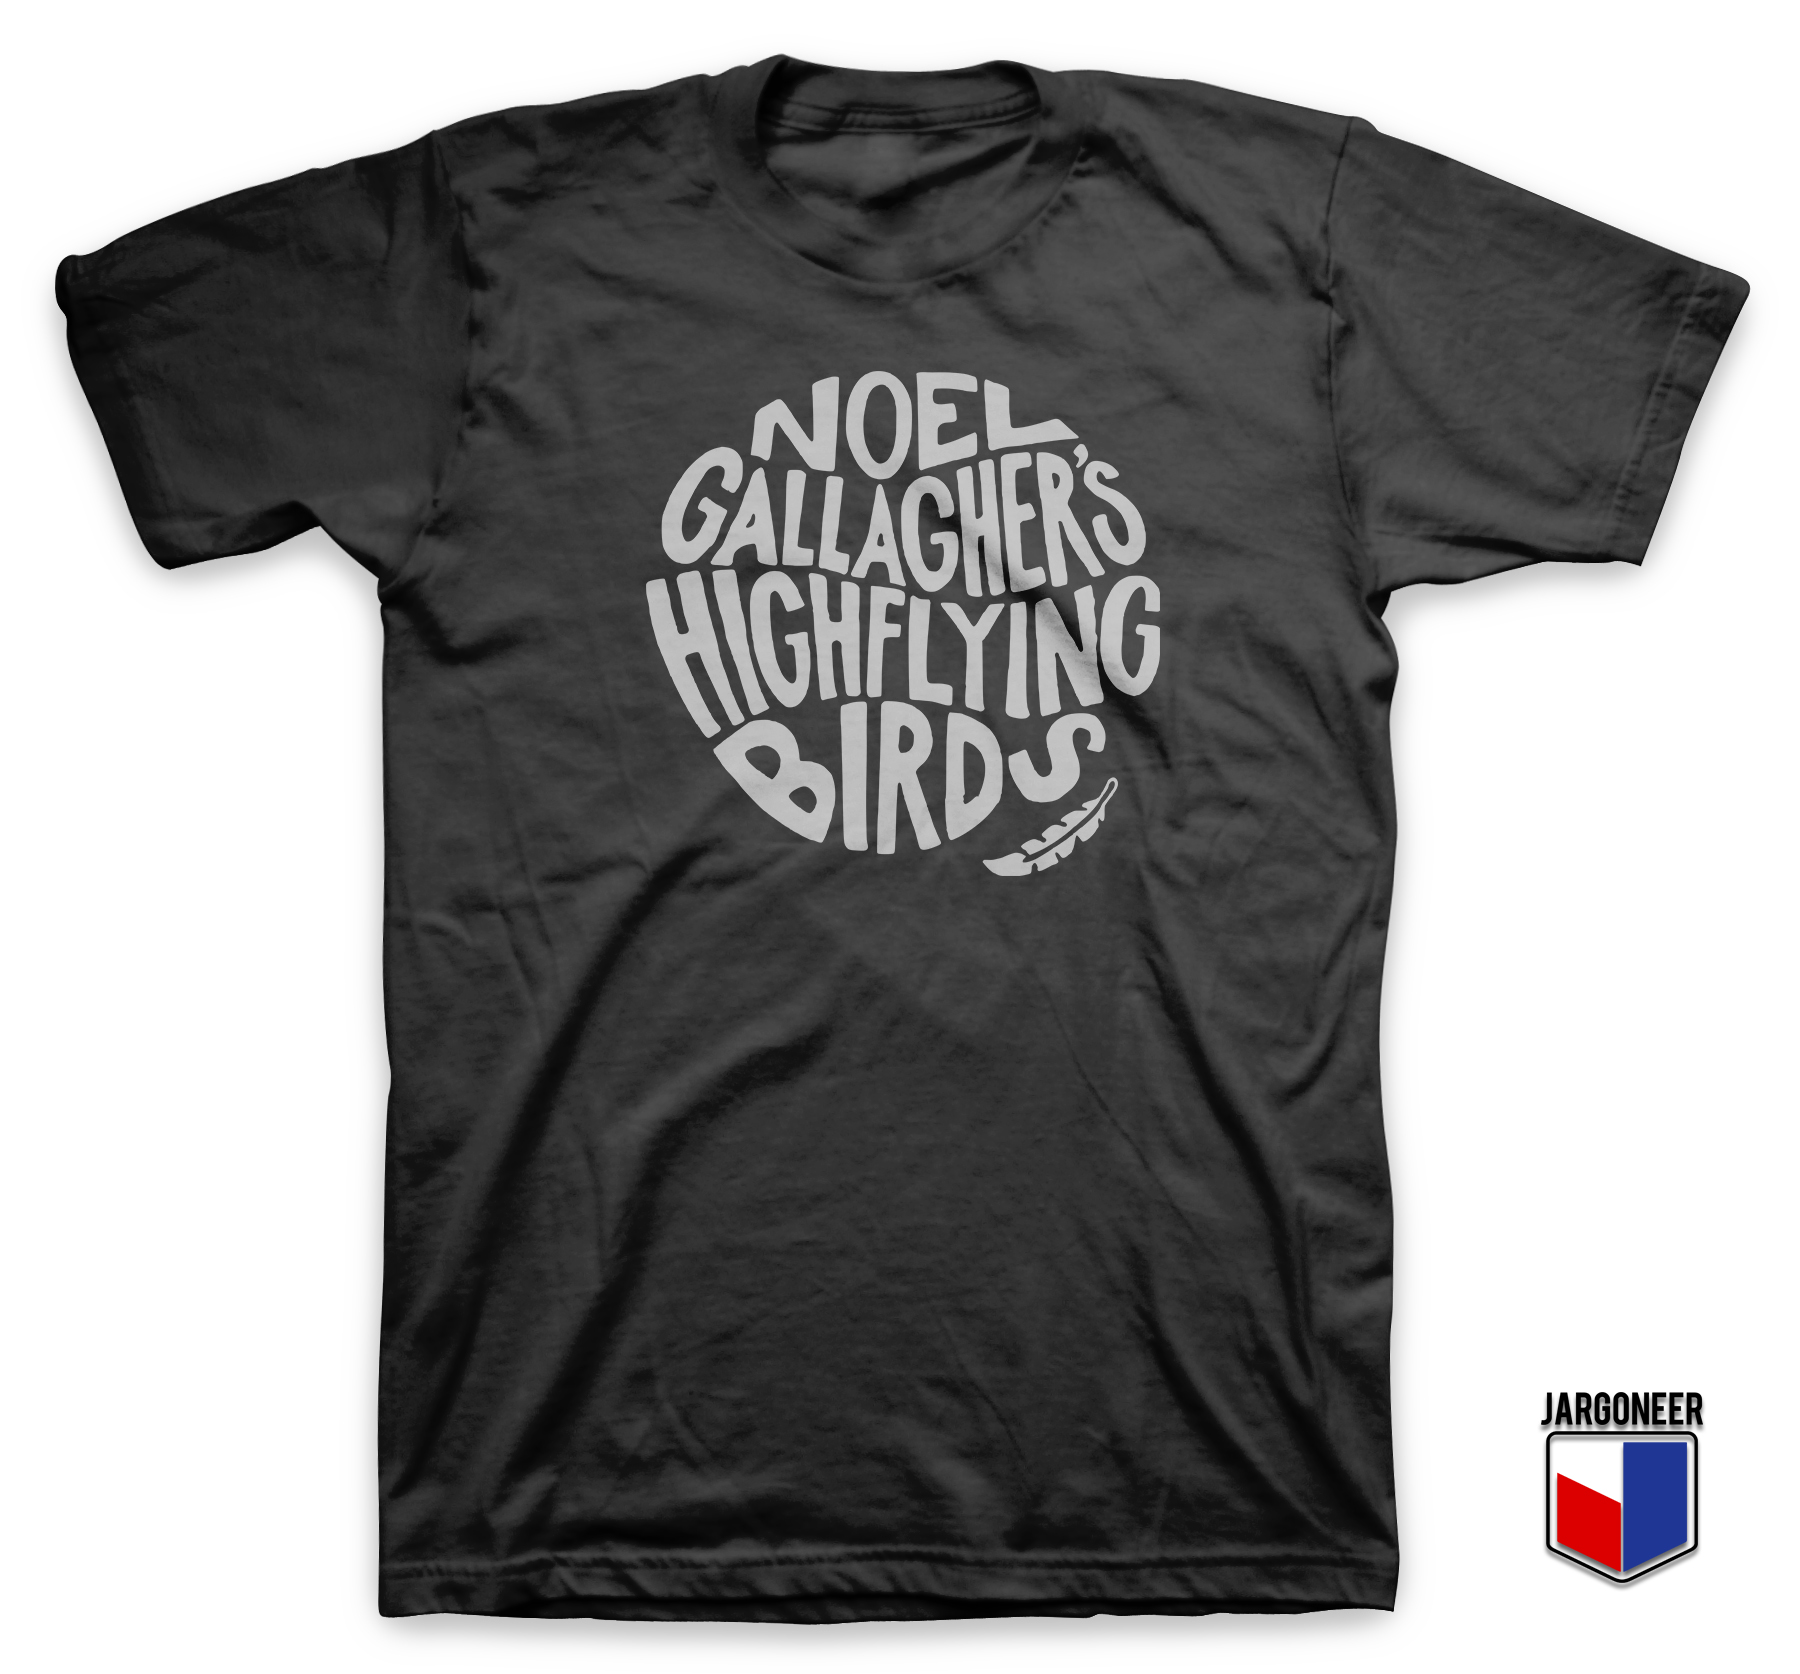 High Flying Birds - Shop Unique Graphic Cool Shirt Designs